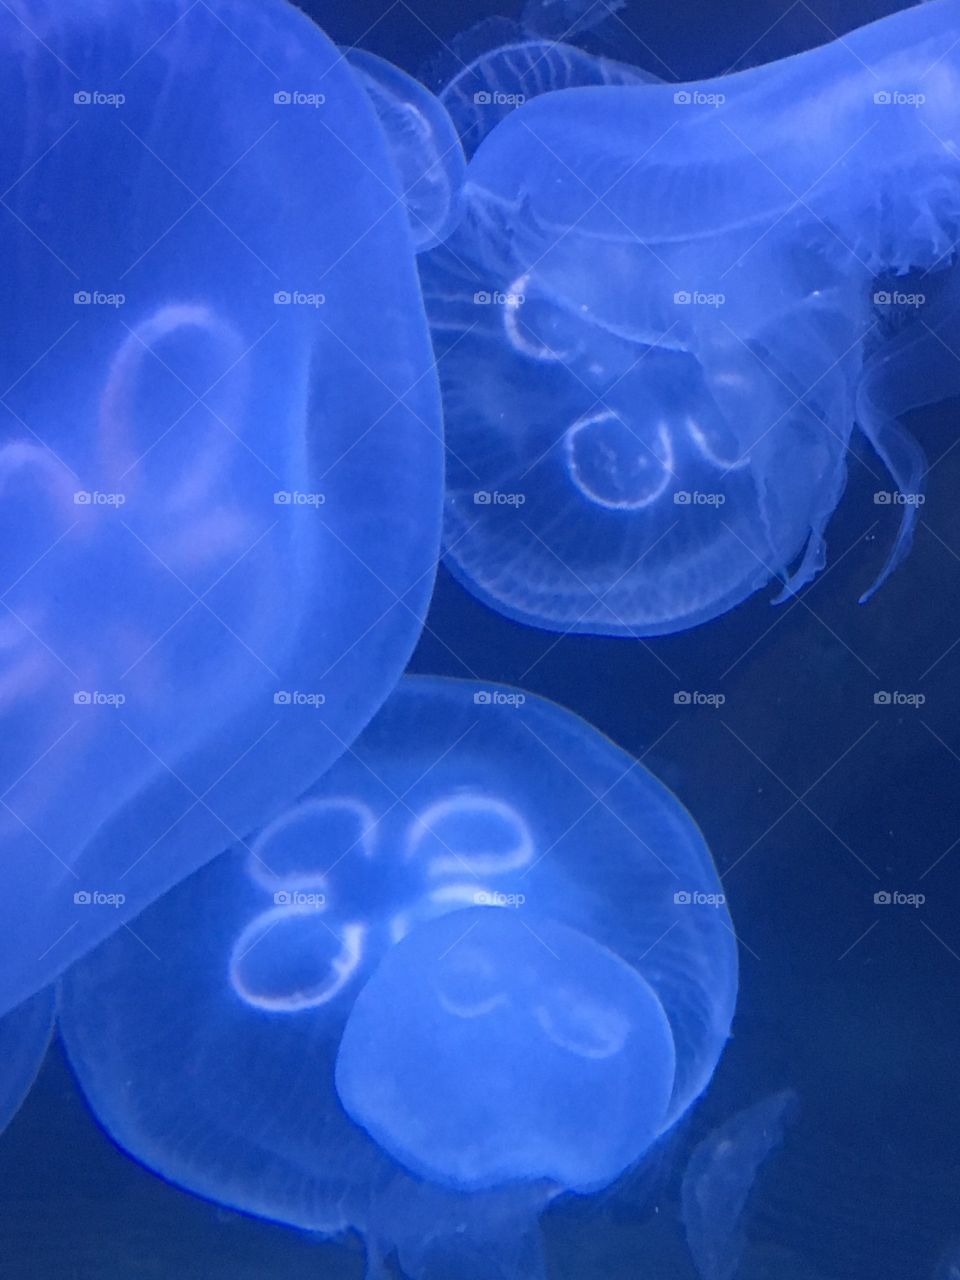 Jellyfish family 